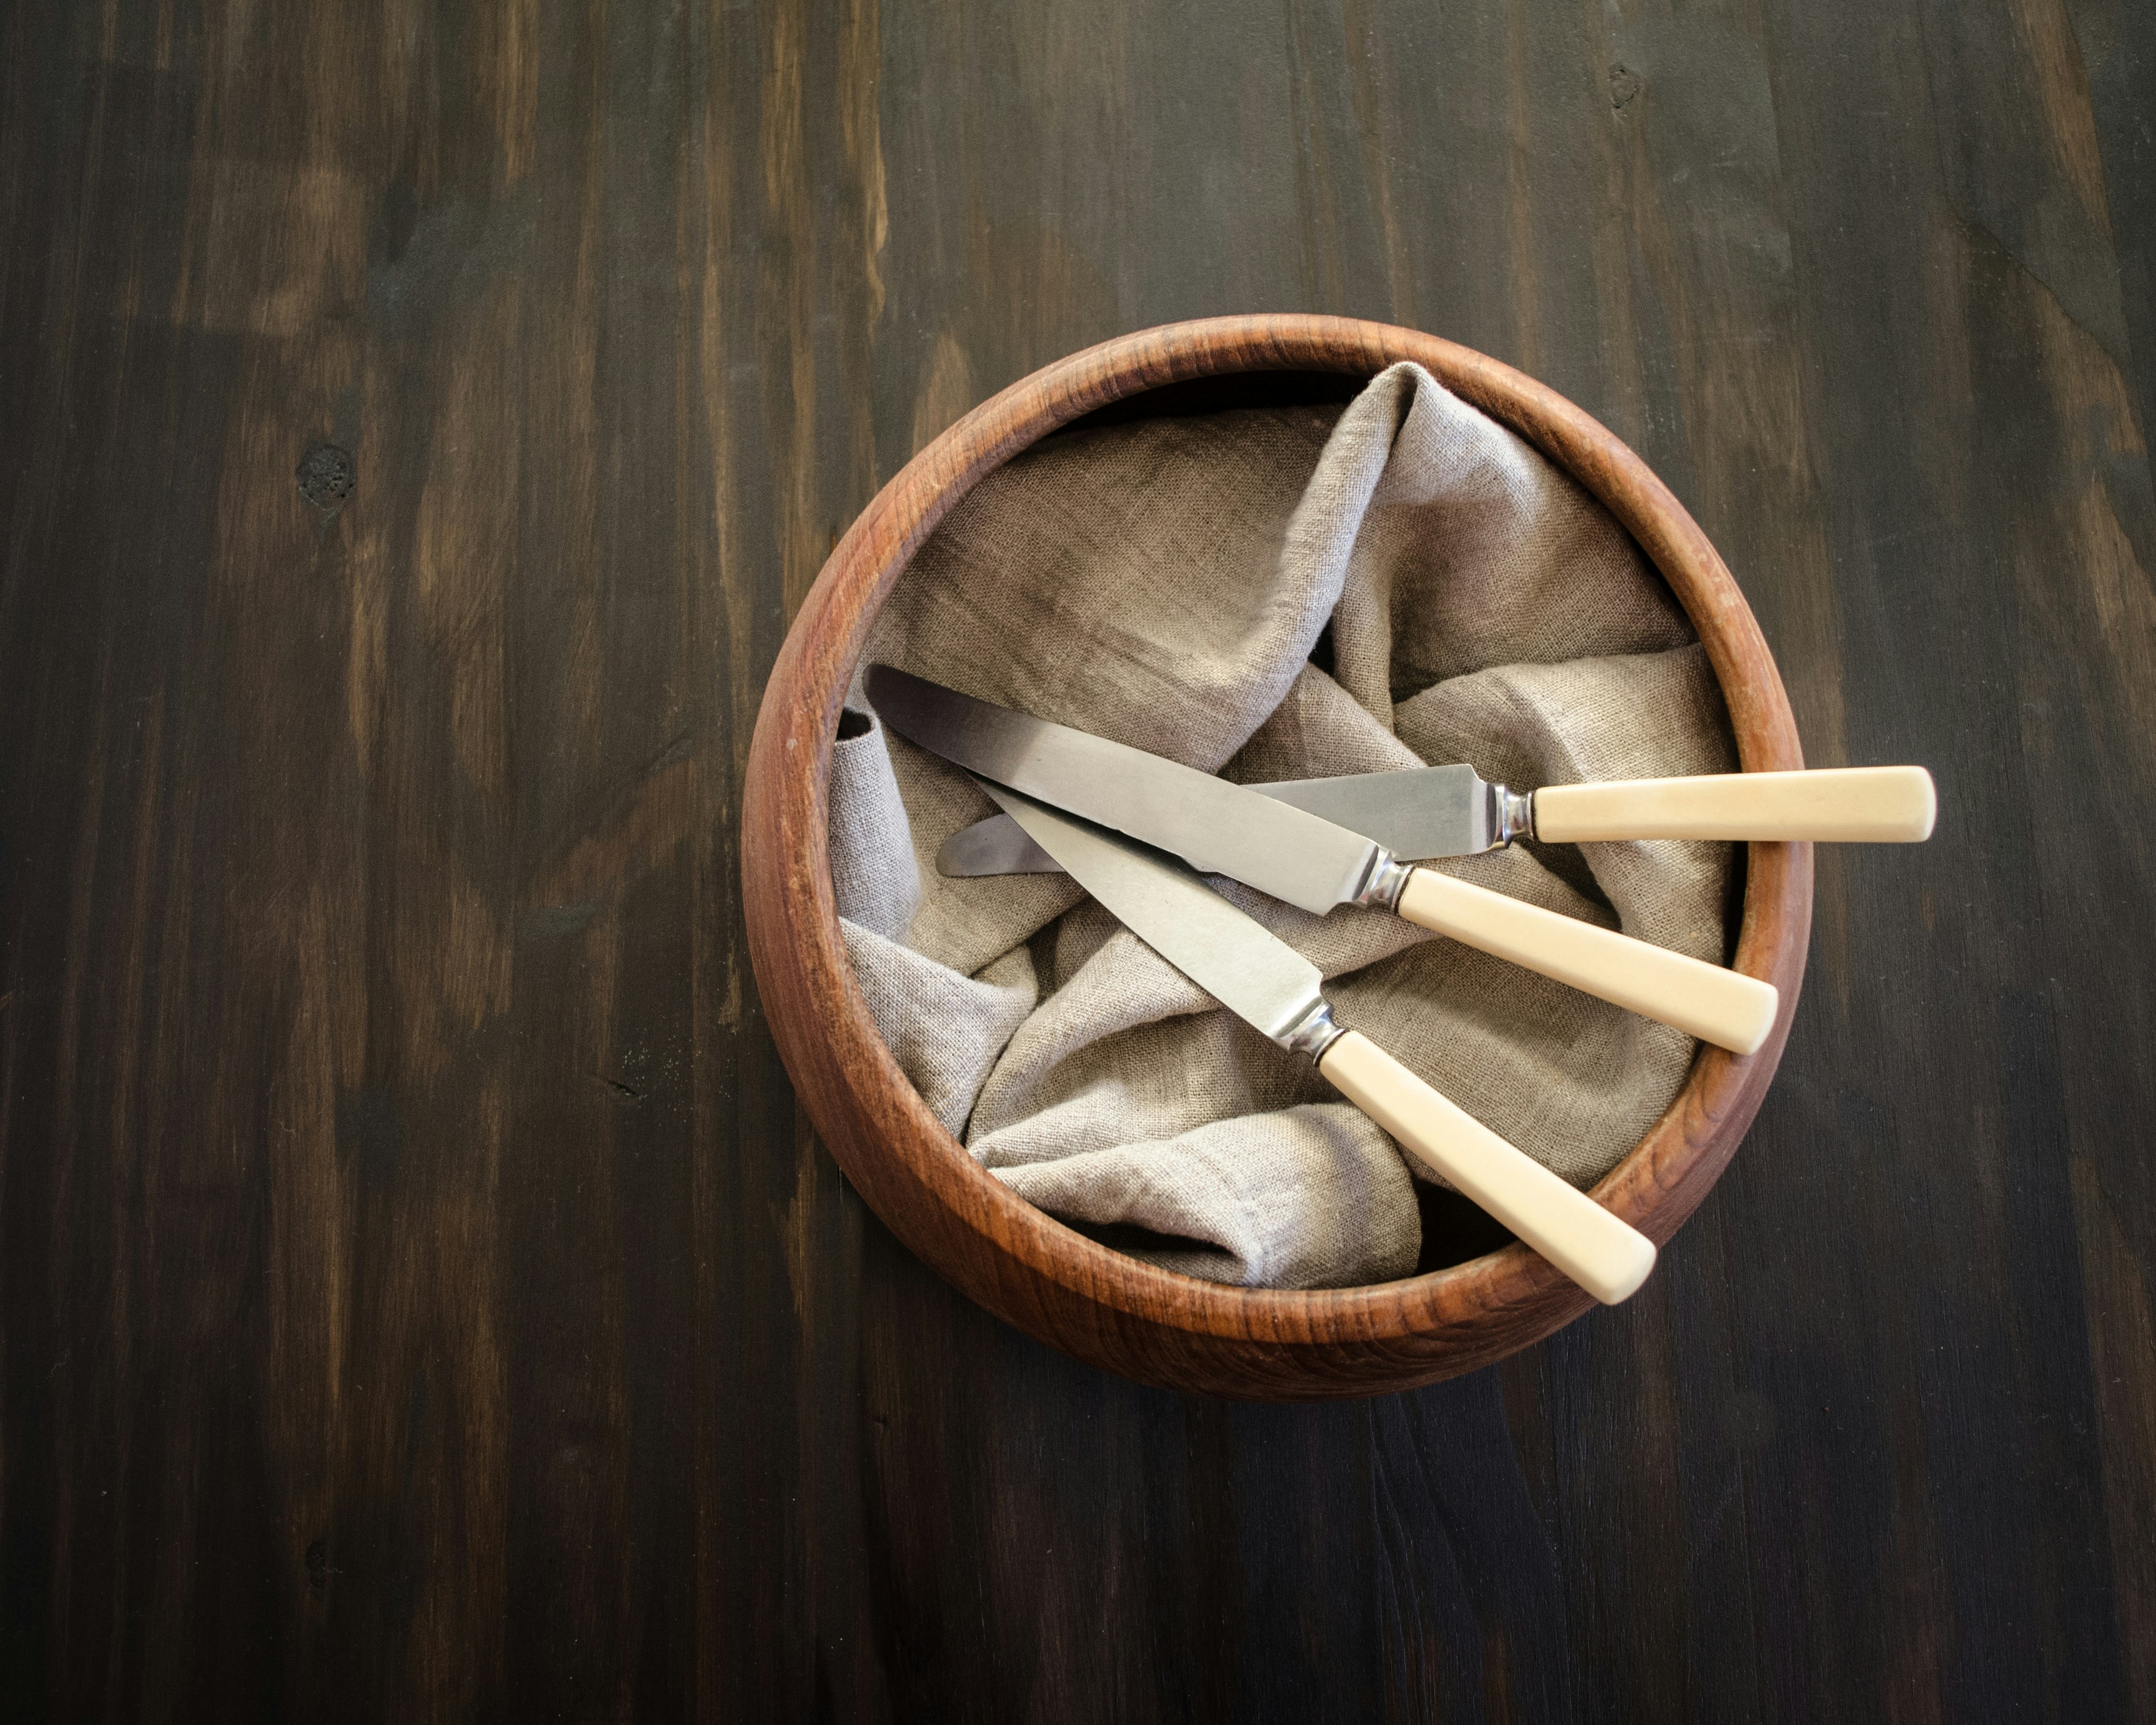 breadknife in brown pot